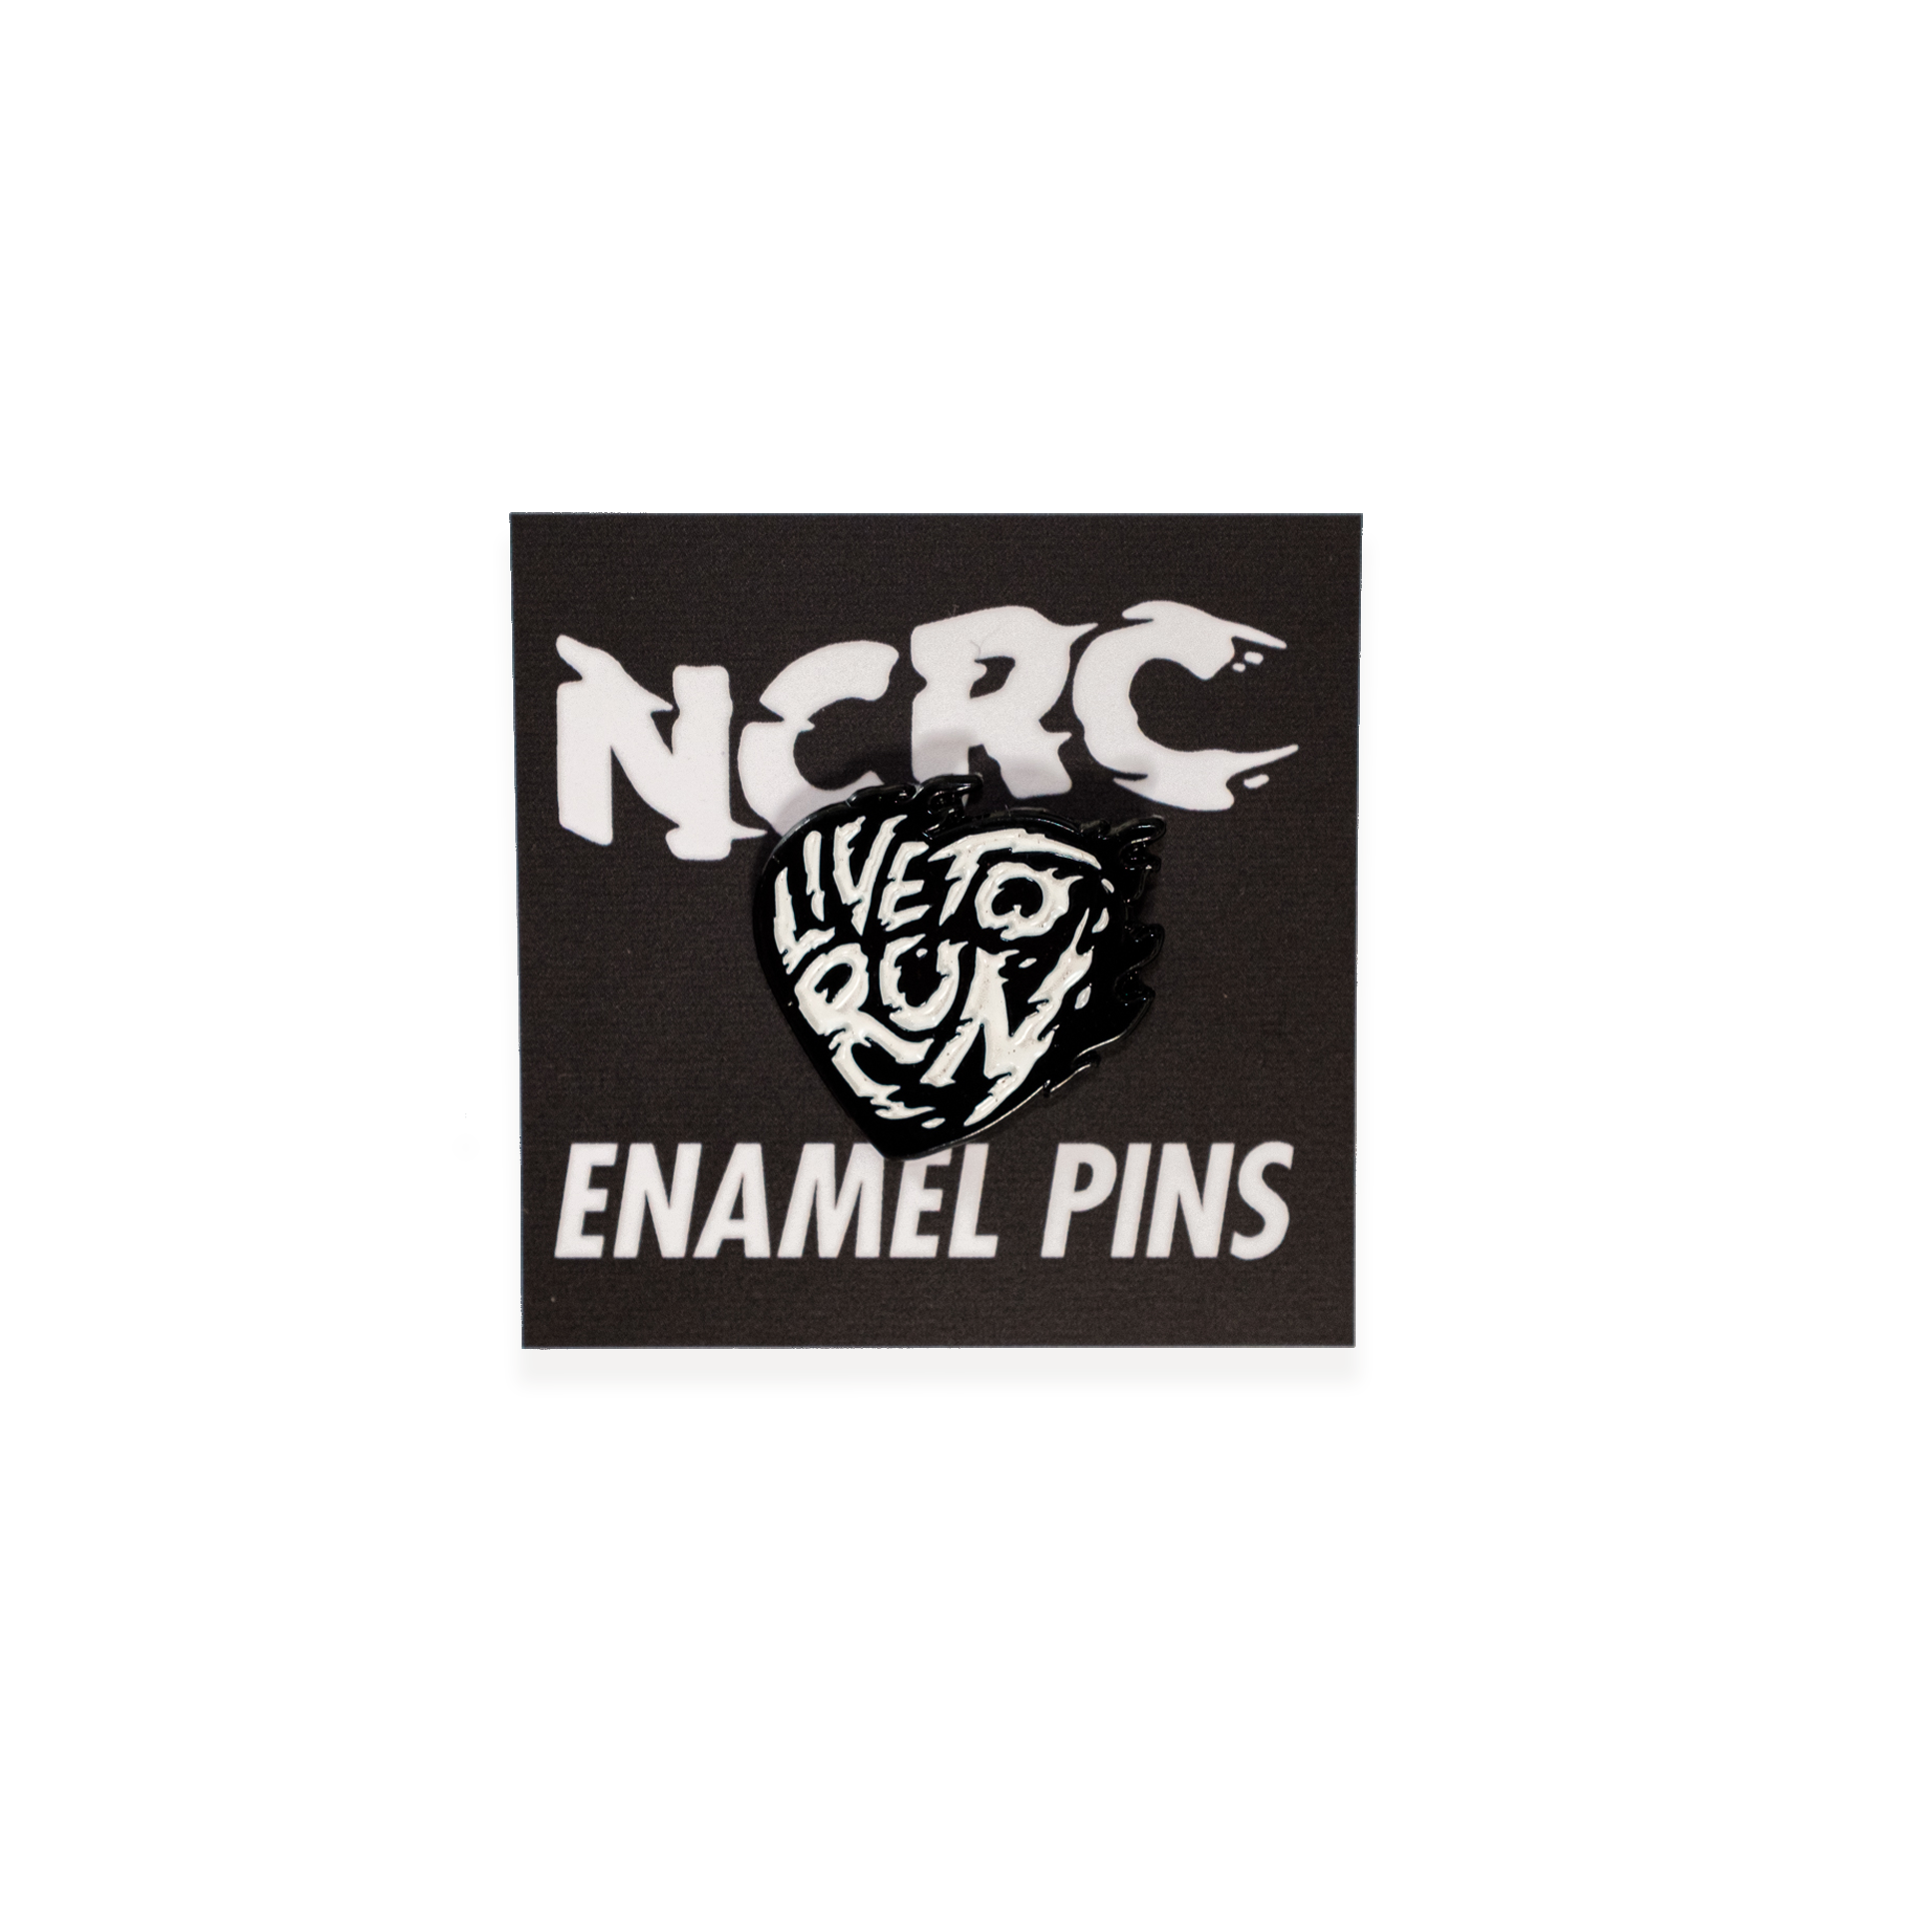 NCRC Enamel Pins: Live To Run